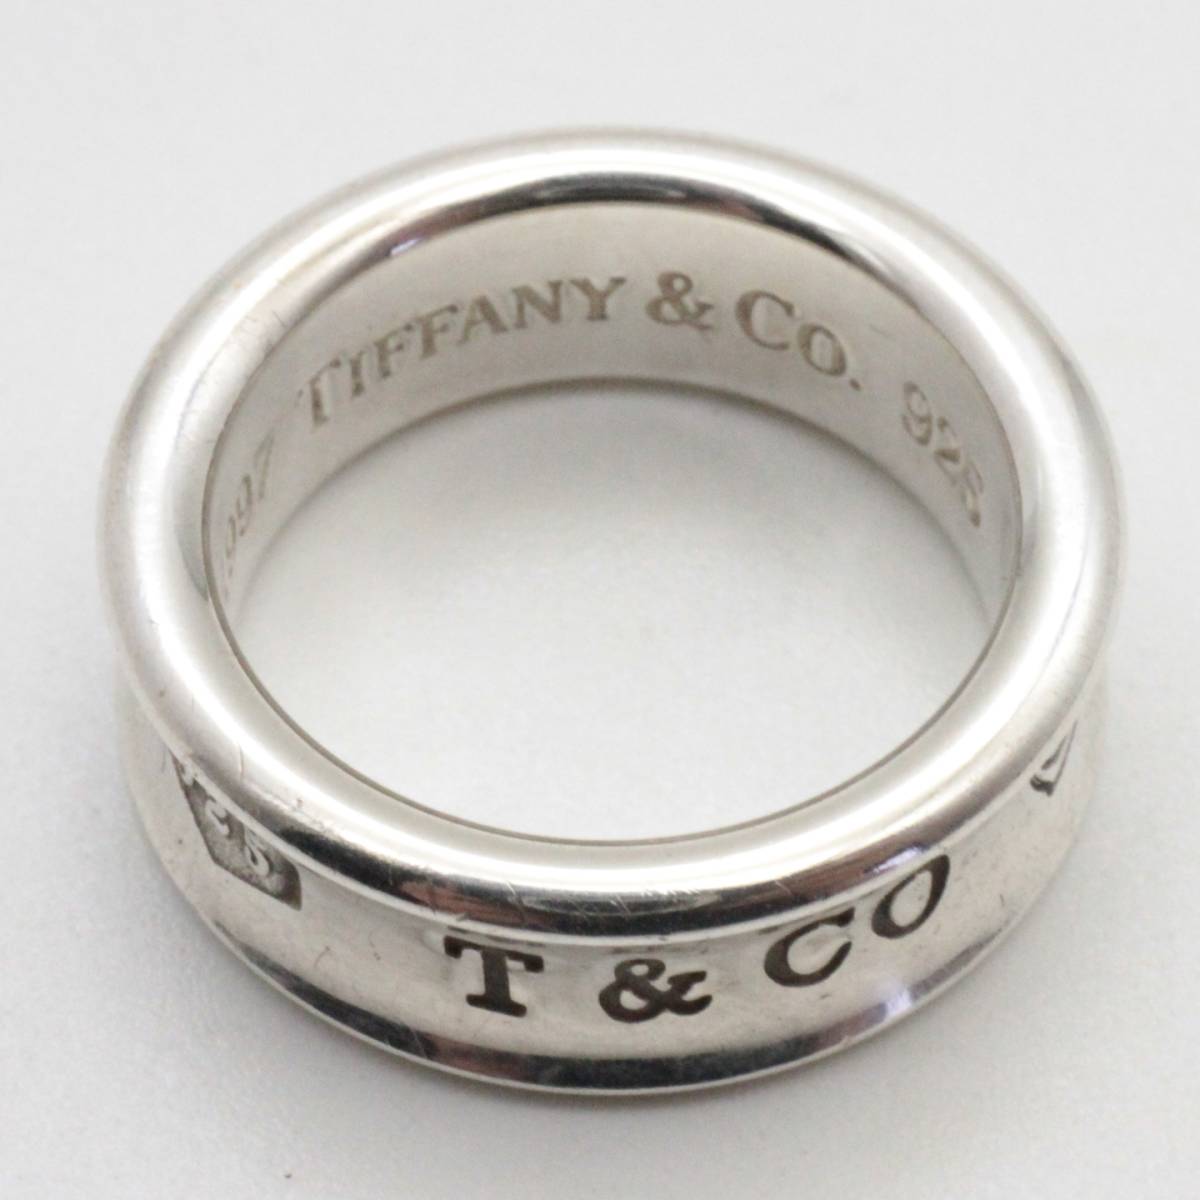 Tiffany & Co. ティファニー 1837 ナローリング SV925